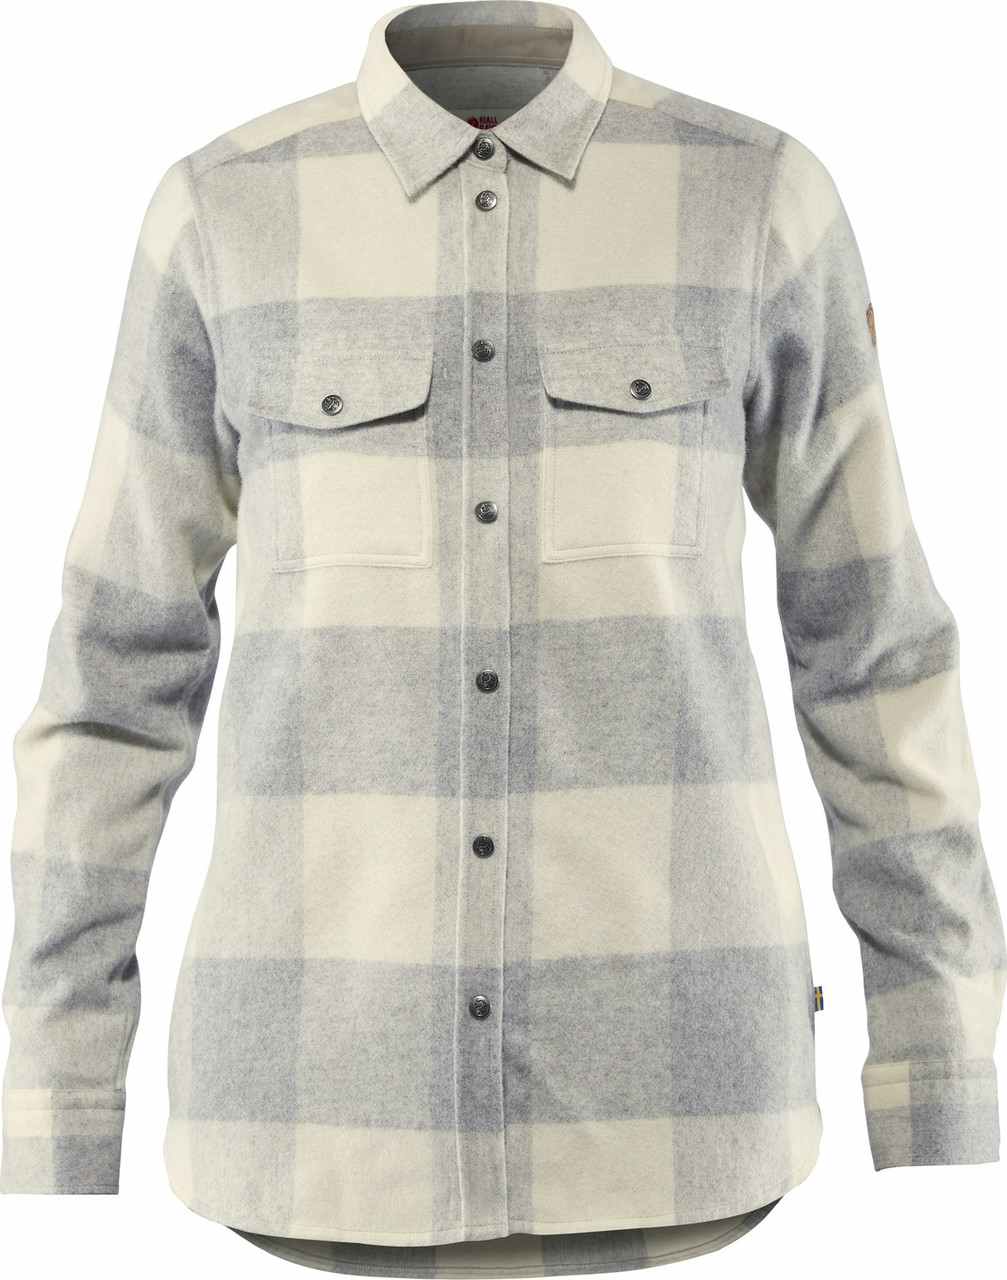 Canada Shirt Long Sleeve Fog/Chalk White